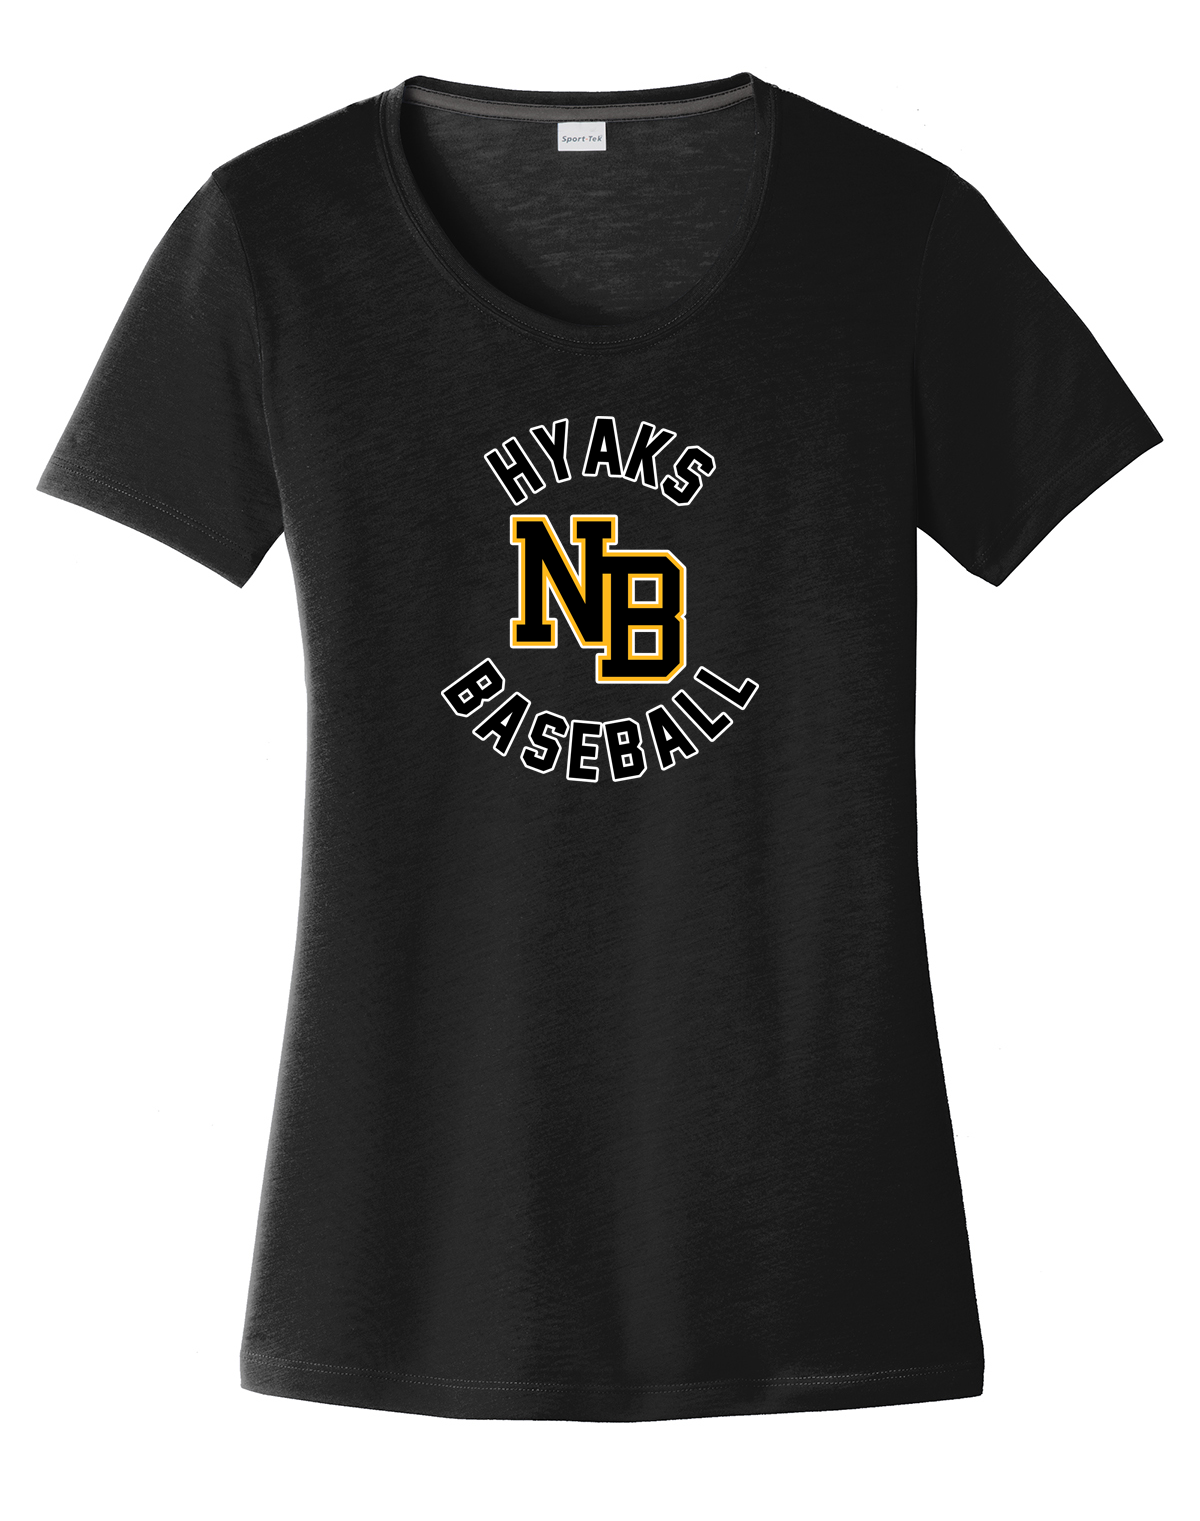 North Beach Baseball Women's CottonTouch Performance T-Shirt